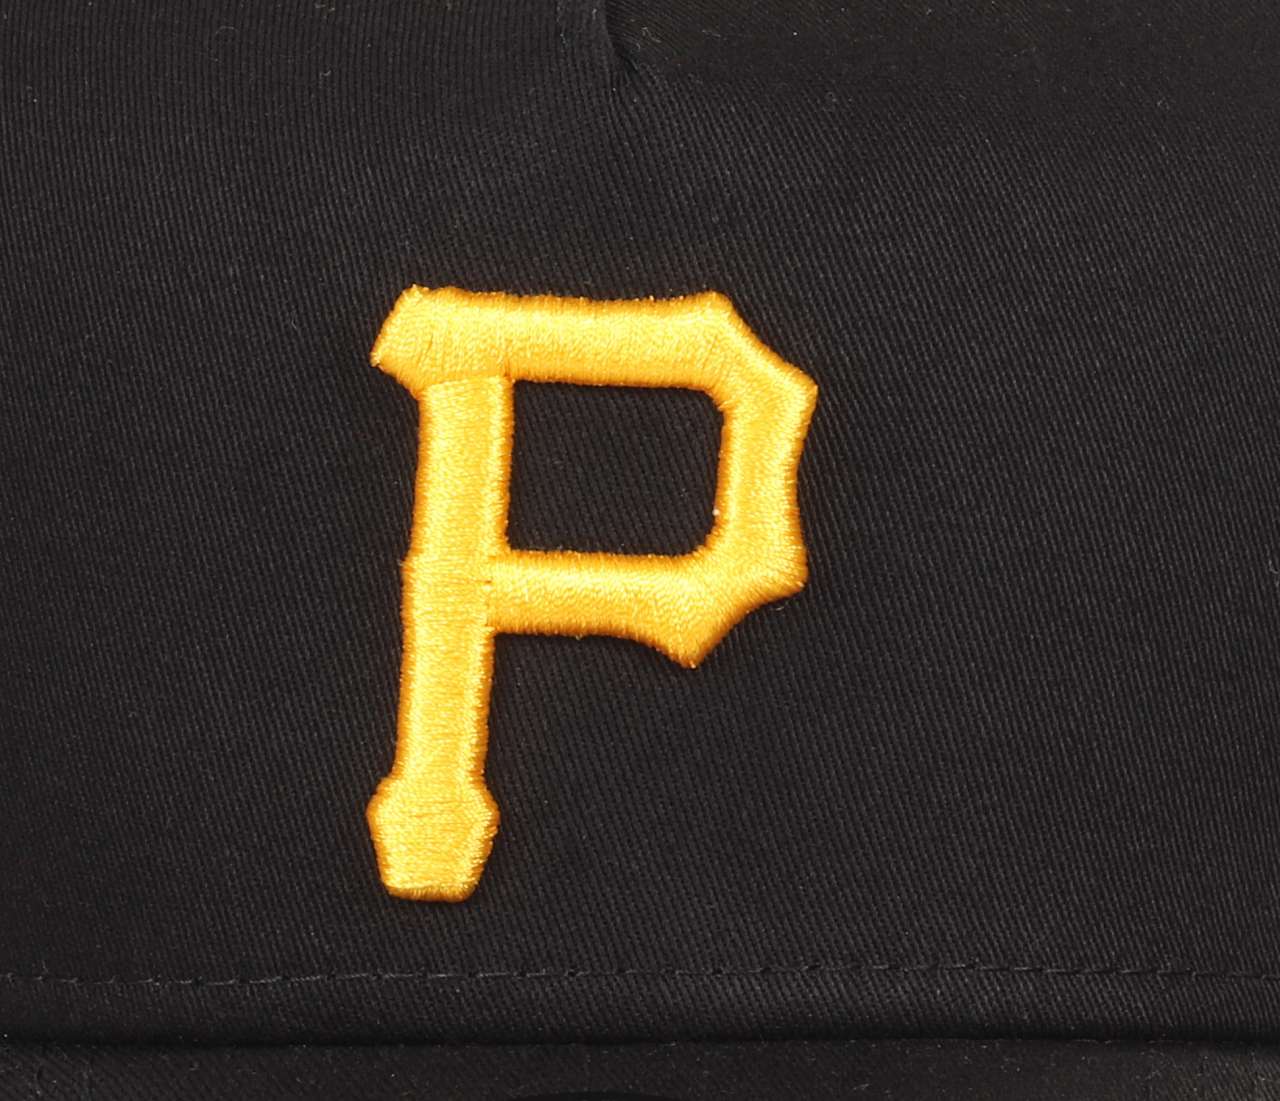 Pittsburgh Pirates MLB Black Classic  9Forty A-Frame Snapback Cap New Era